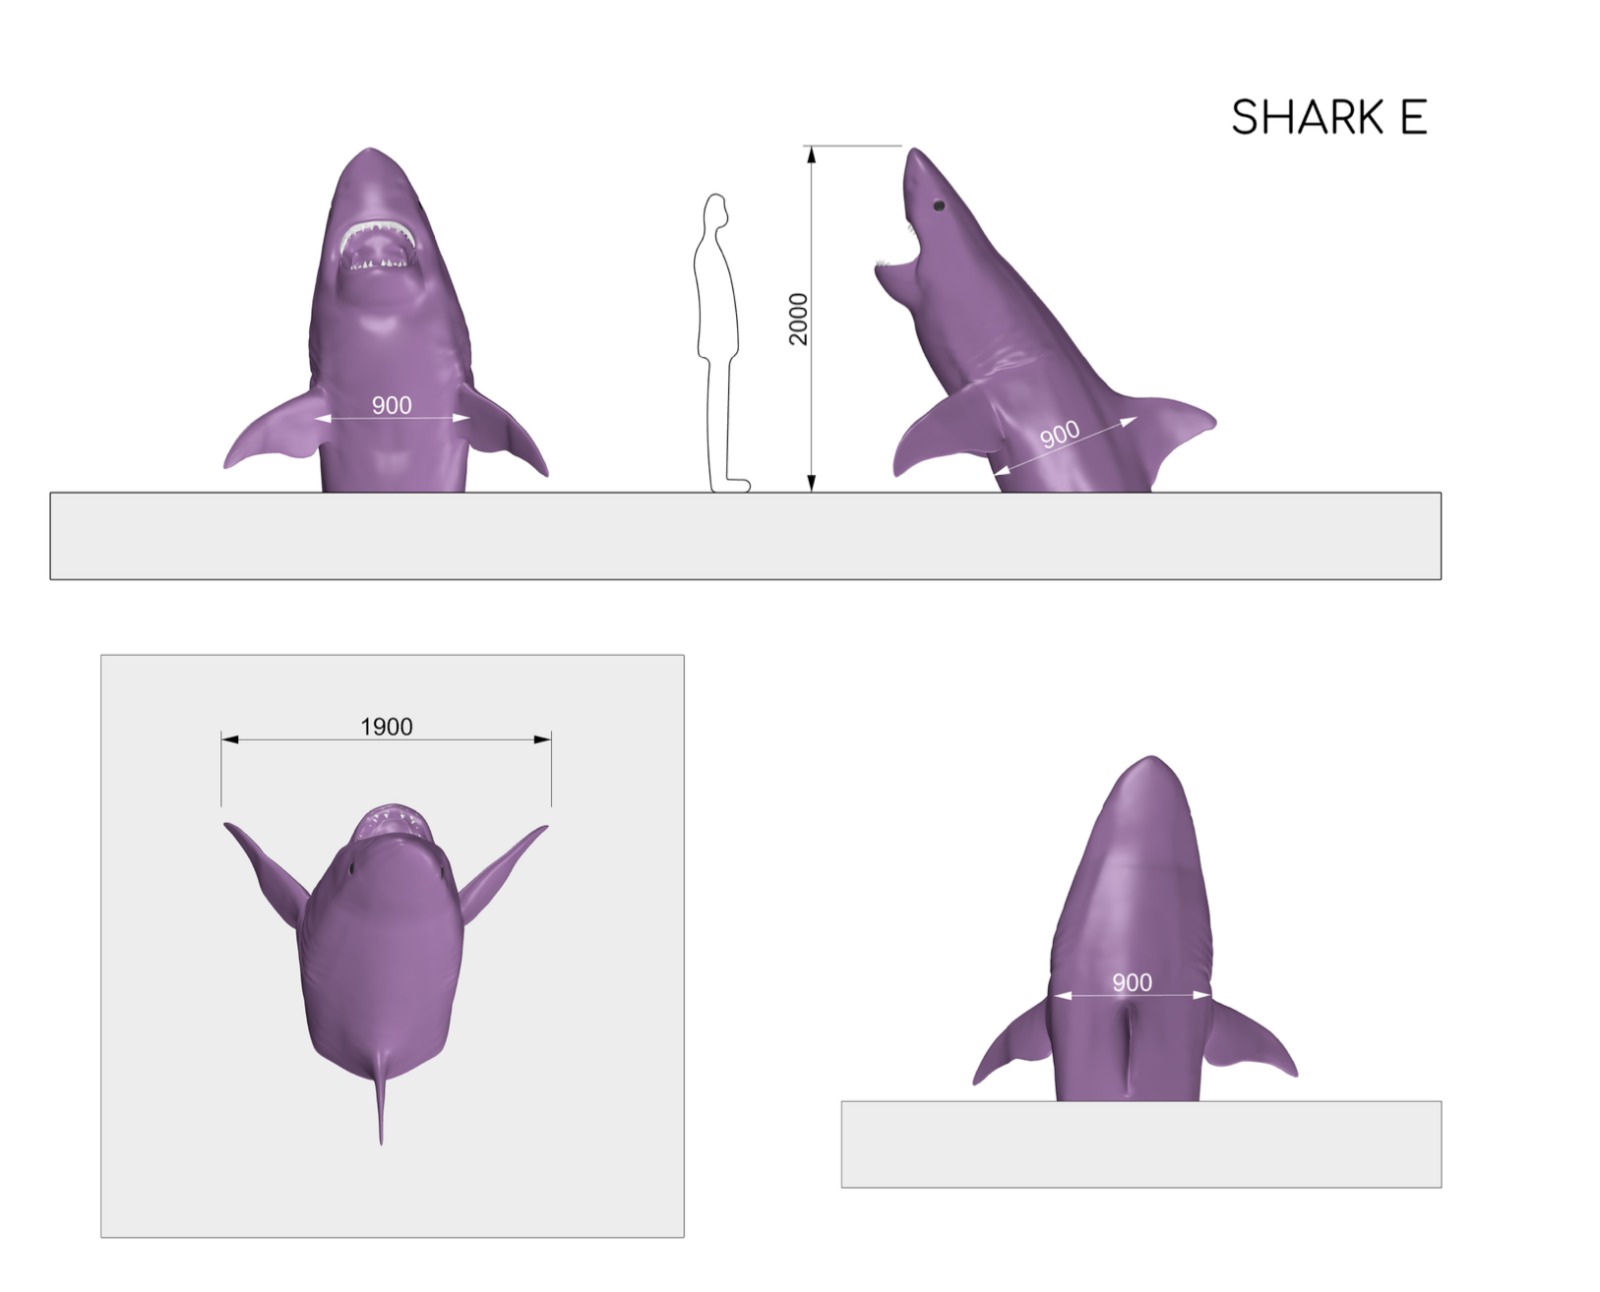 White shark dimensions